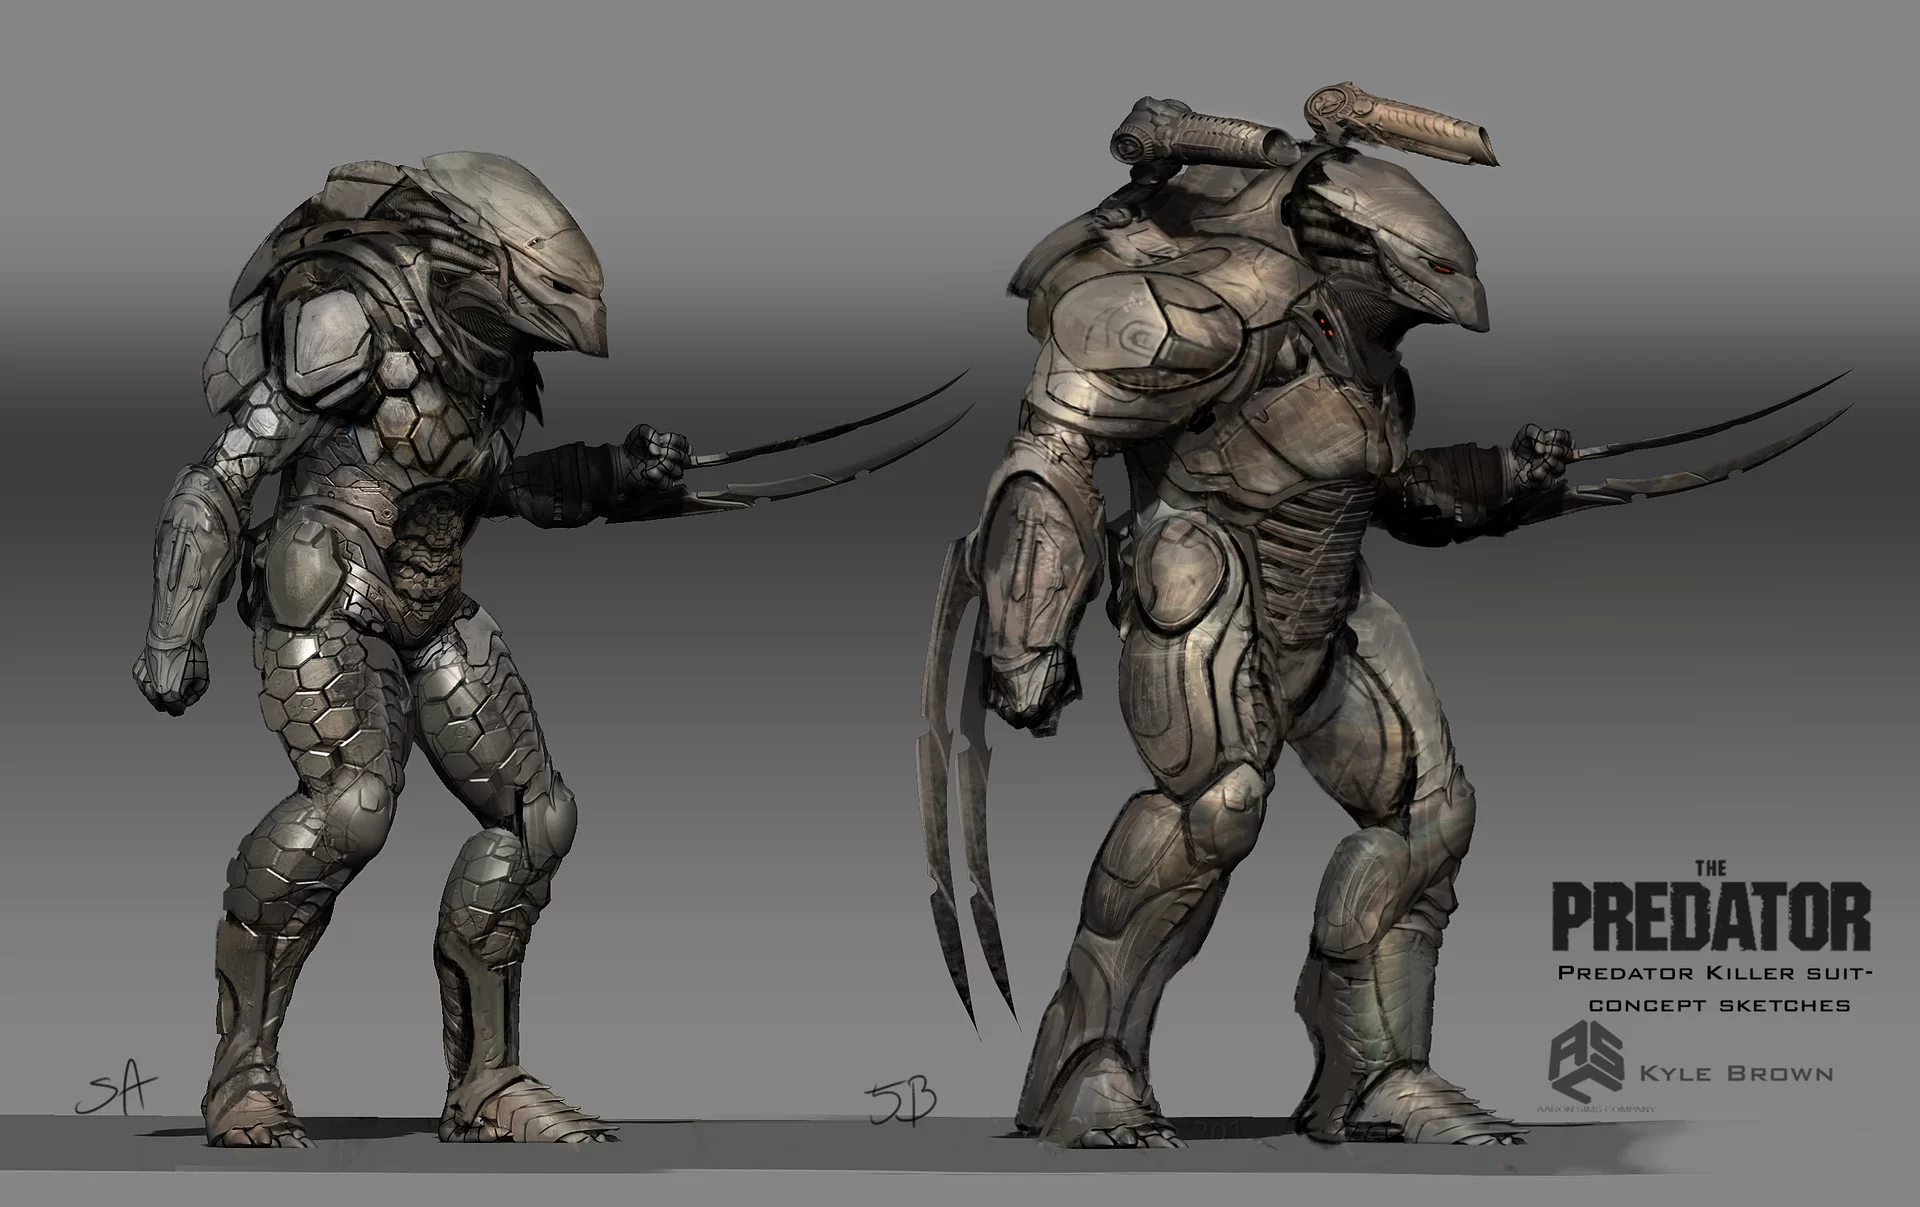 Kyle Brown Shares New Predator Killer Concept Art! - Alien vs. Predator  Galaxy